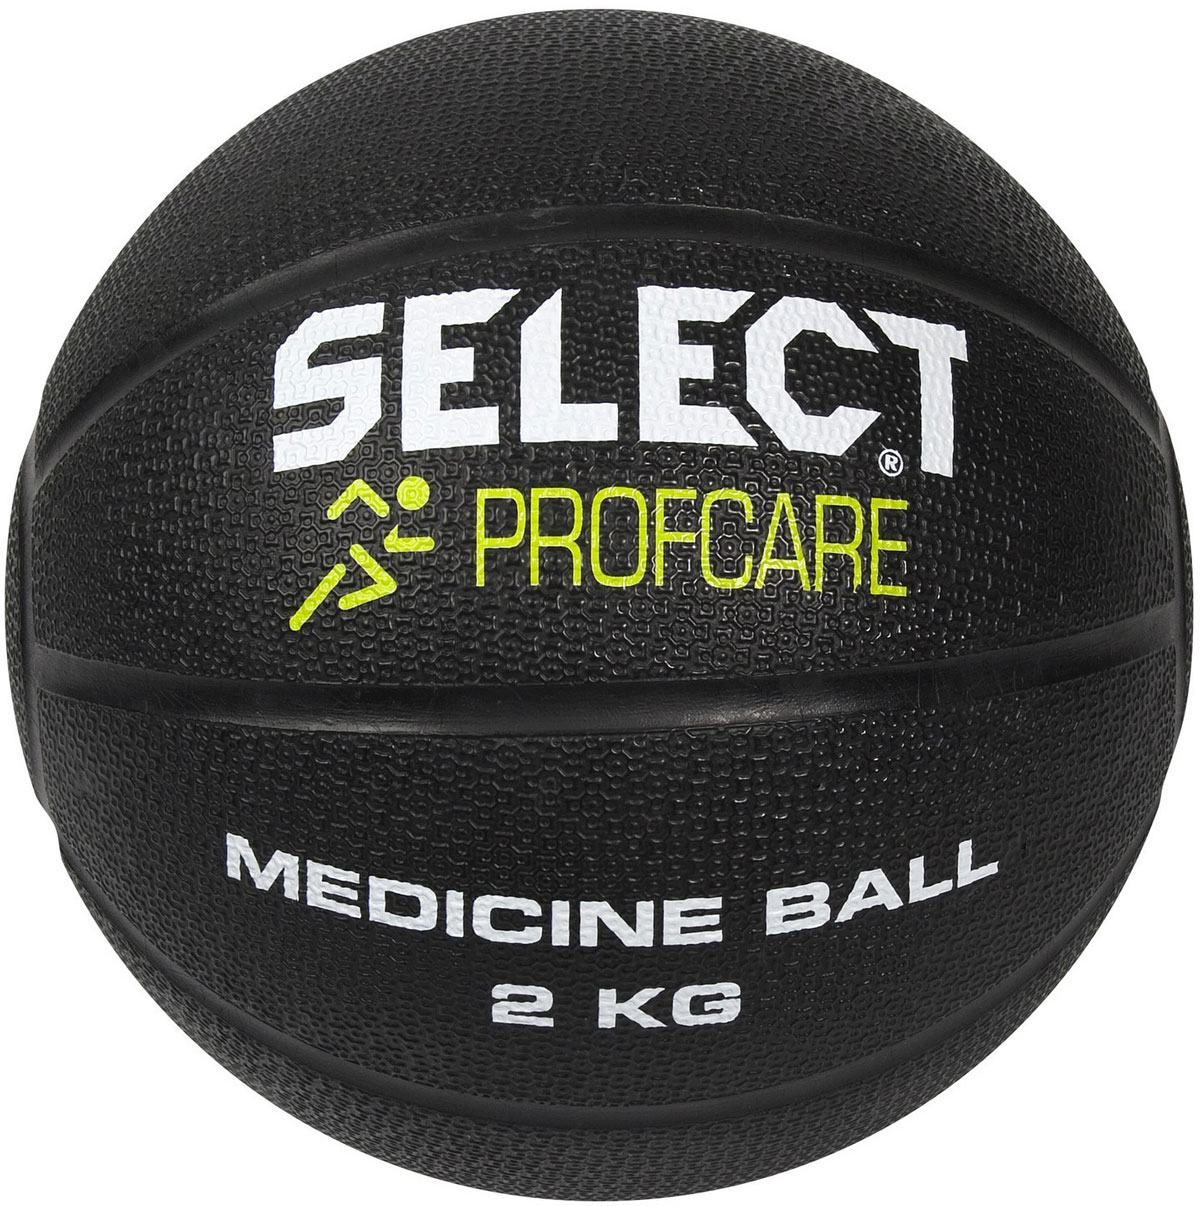 MEDICINE BALL 1KG - Medicine Ball